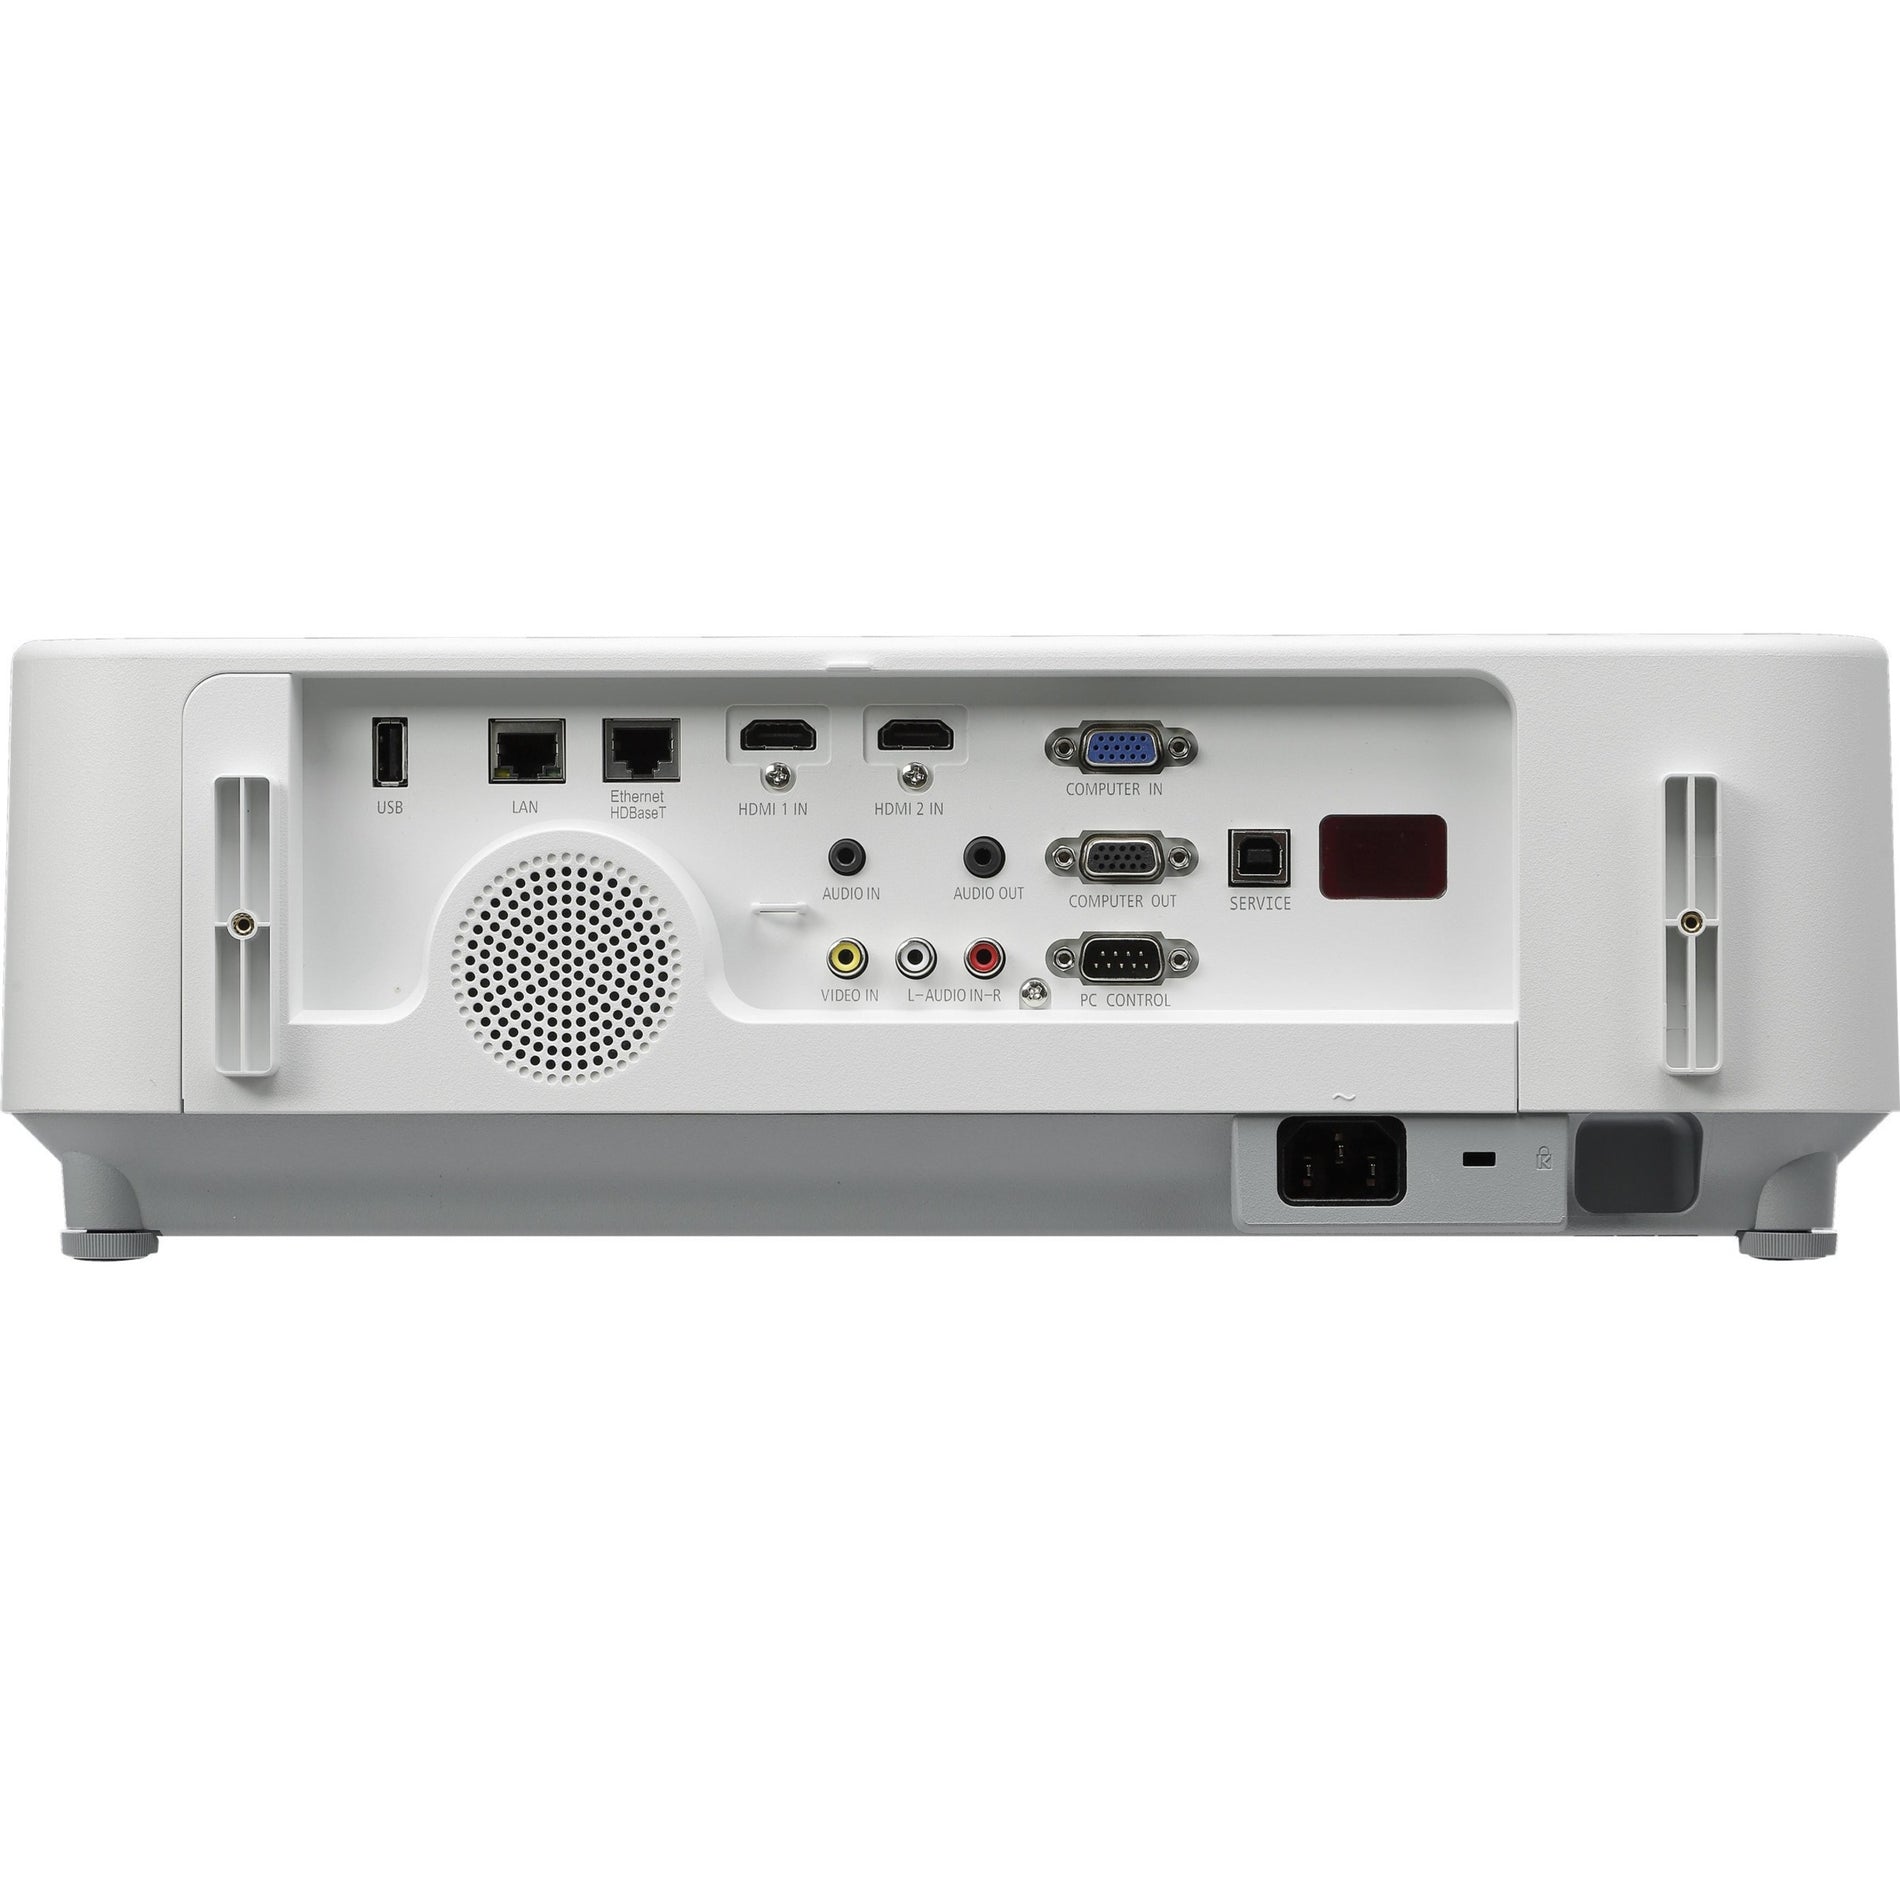 NEC Display NP-P474U 4700-Lumen Entry-Level Professional Installation Projector, WUXGA, 1080p, 1.6x Optical Zoom